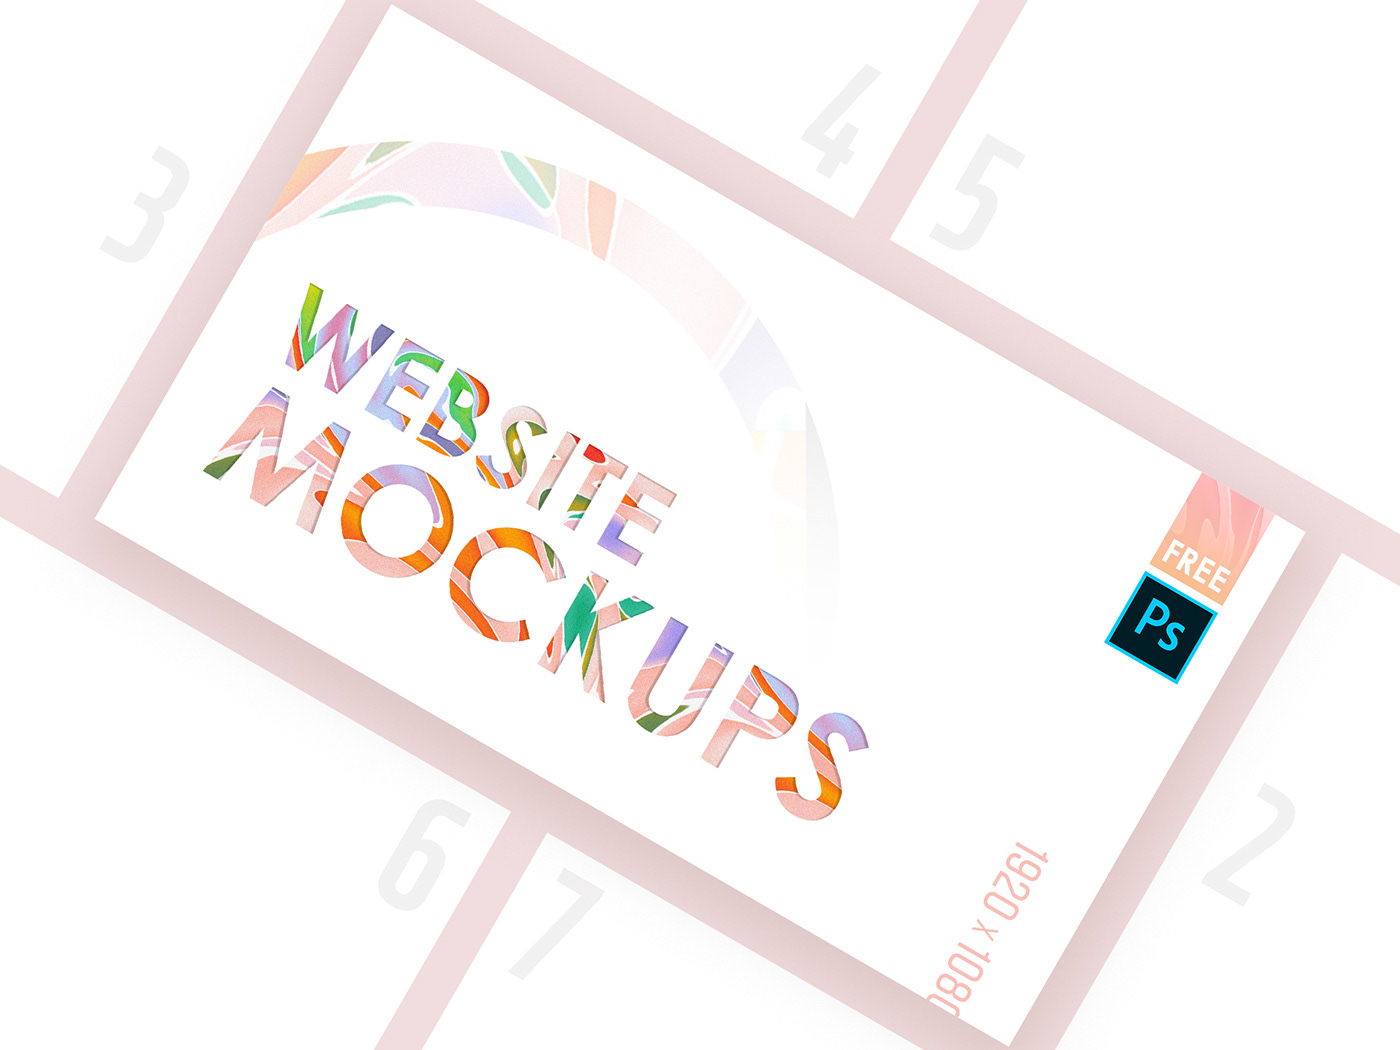 free mockup  Mockup freebie web mockup banner mockup free WEB SCREEN MOCkUP Website Web mockup pack